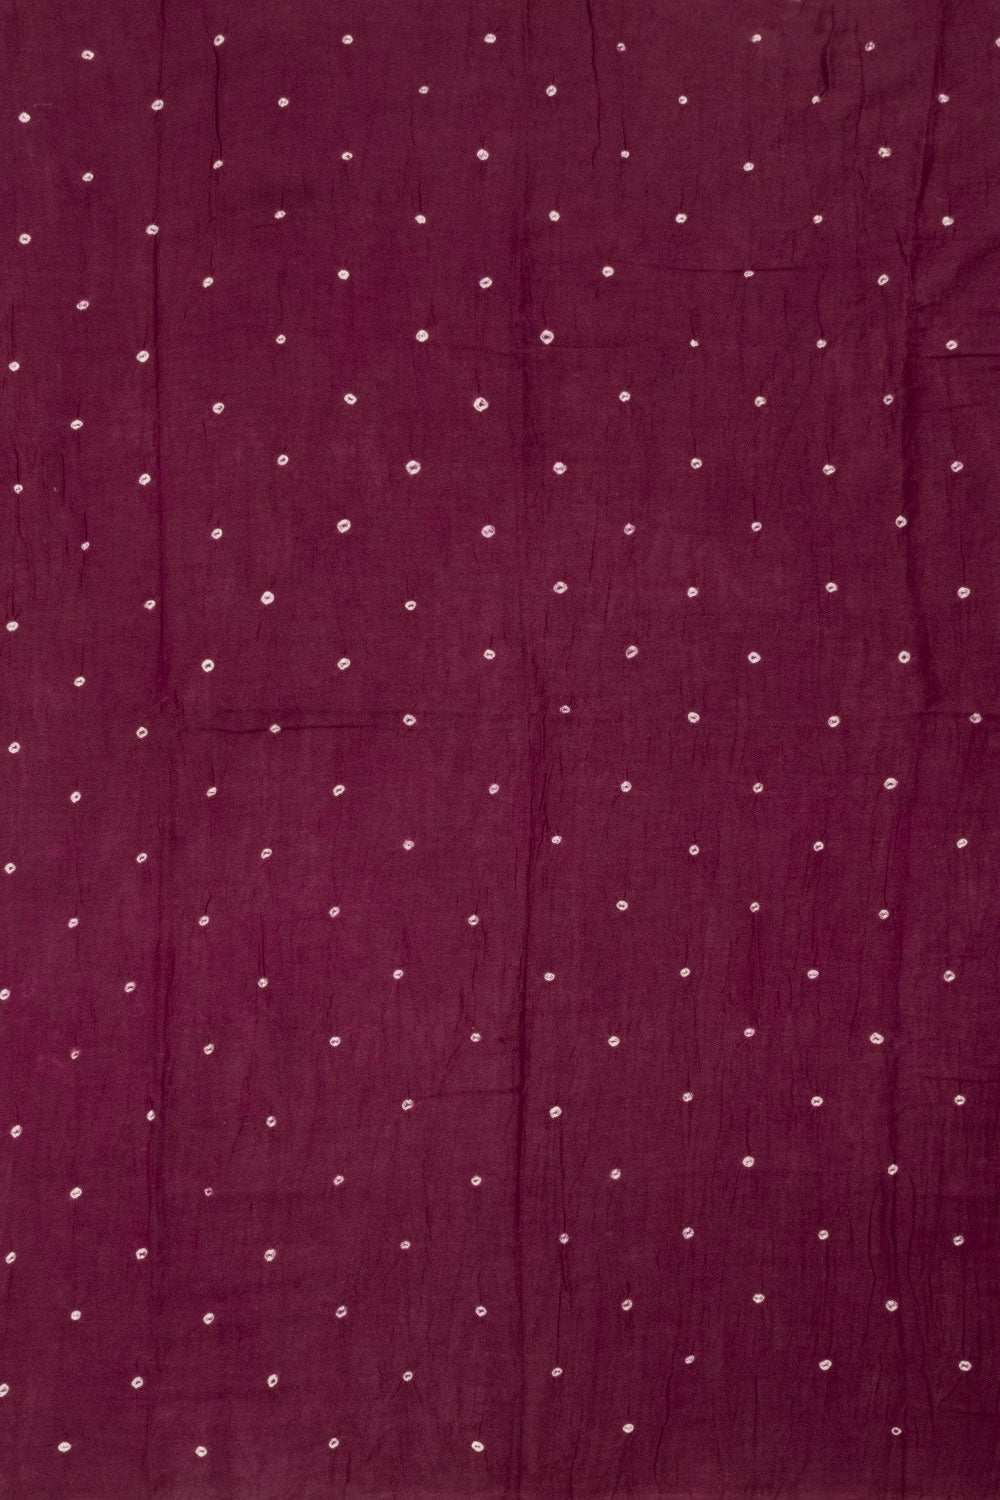 Magenta Bandhani Cotton 3-Piece Salwar Suit Material